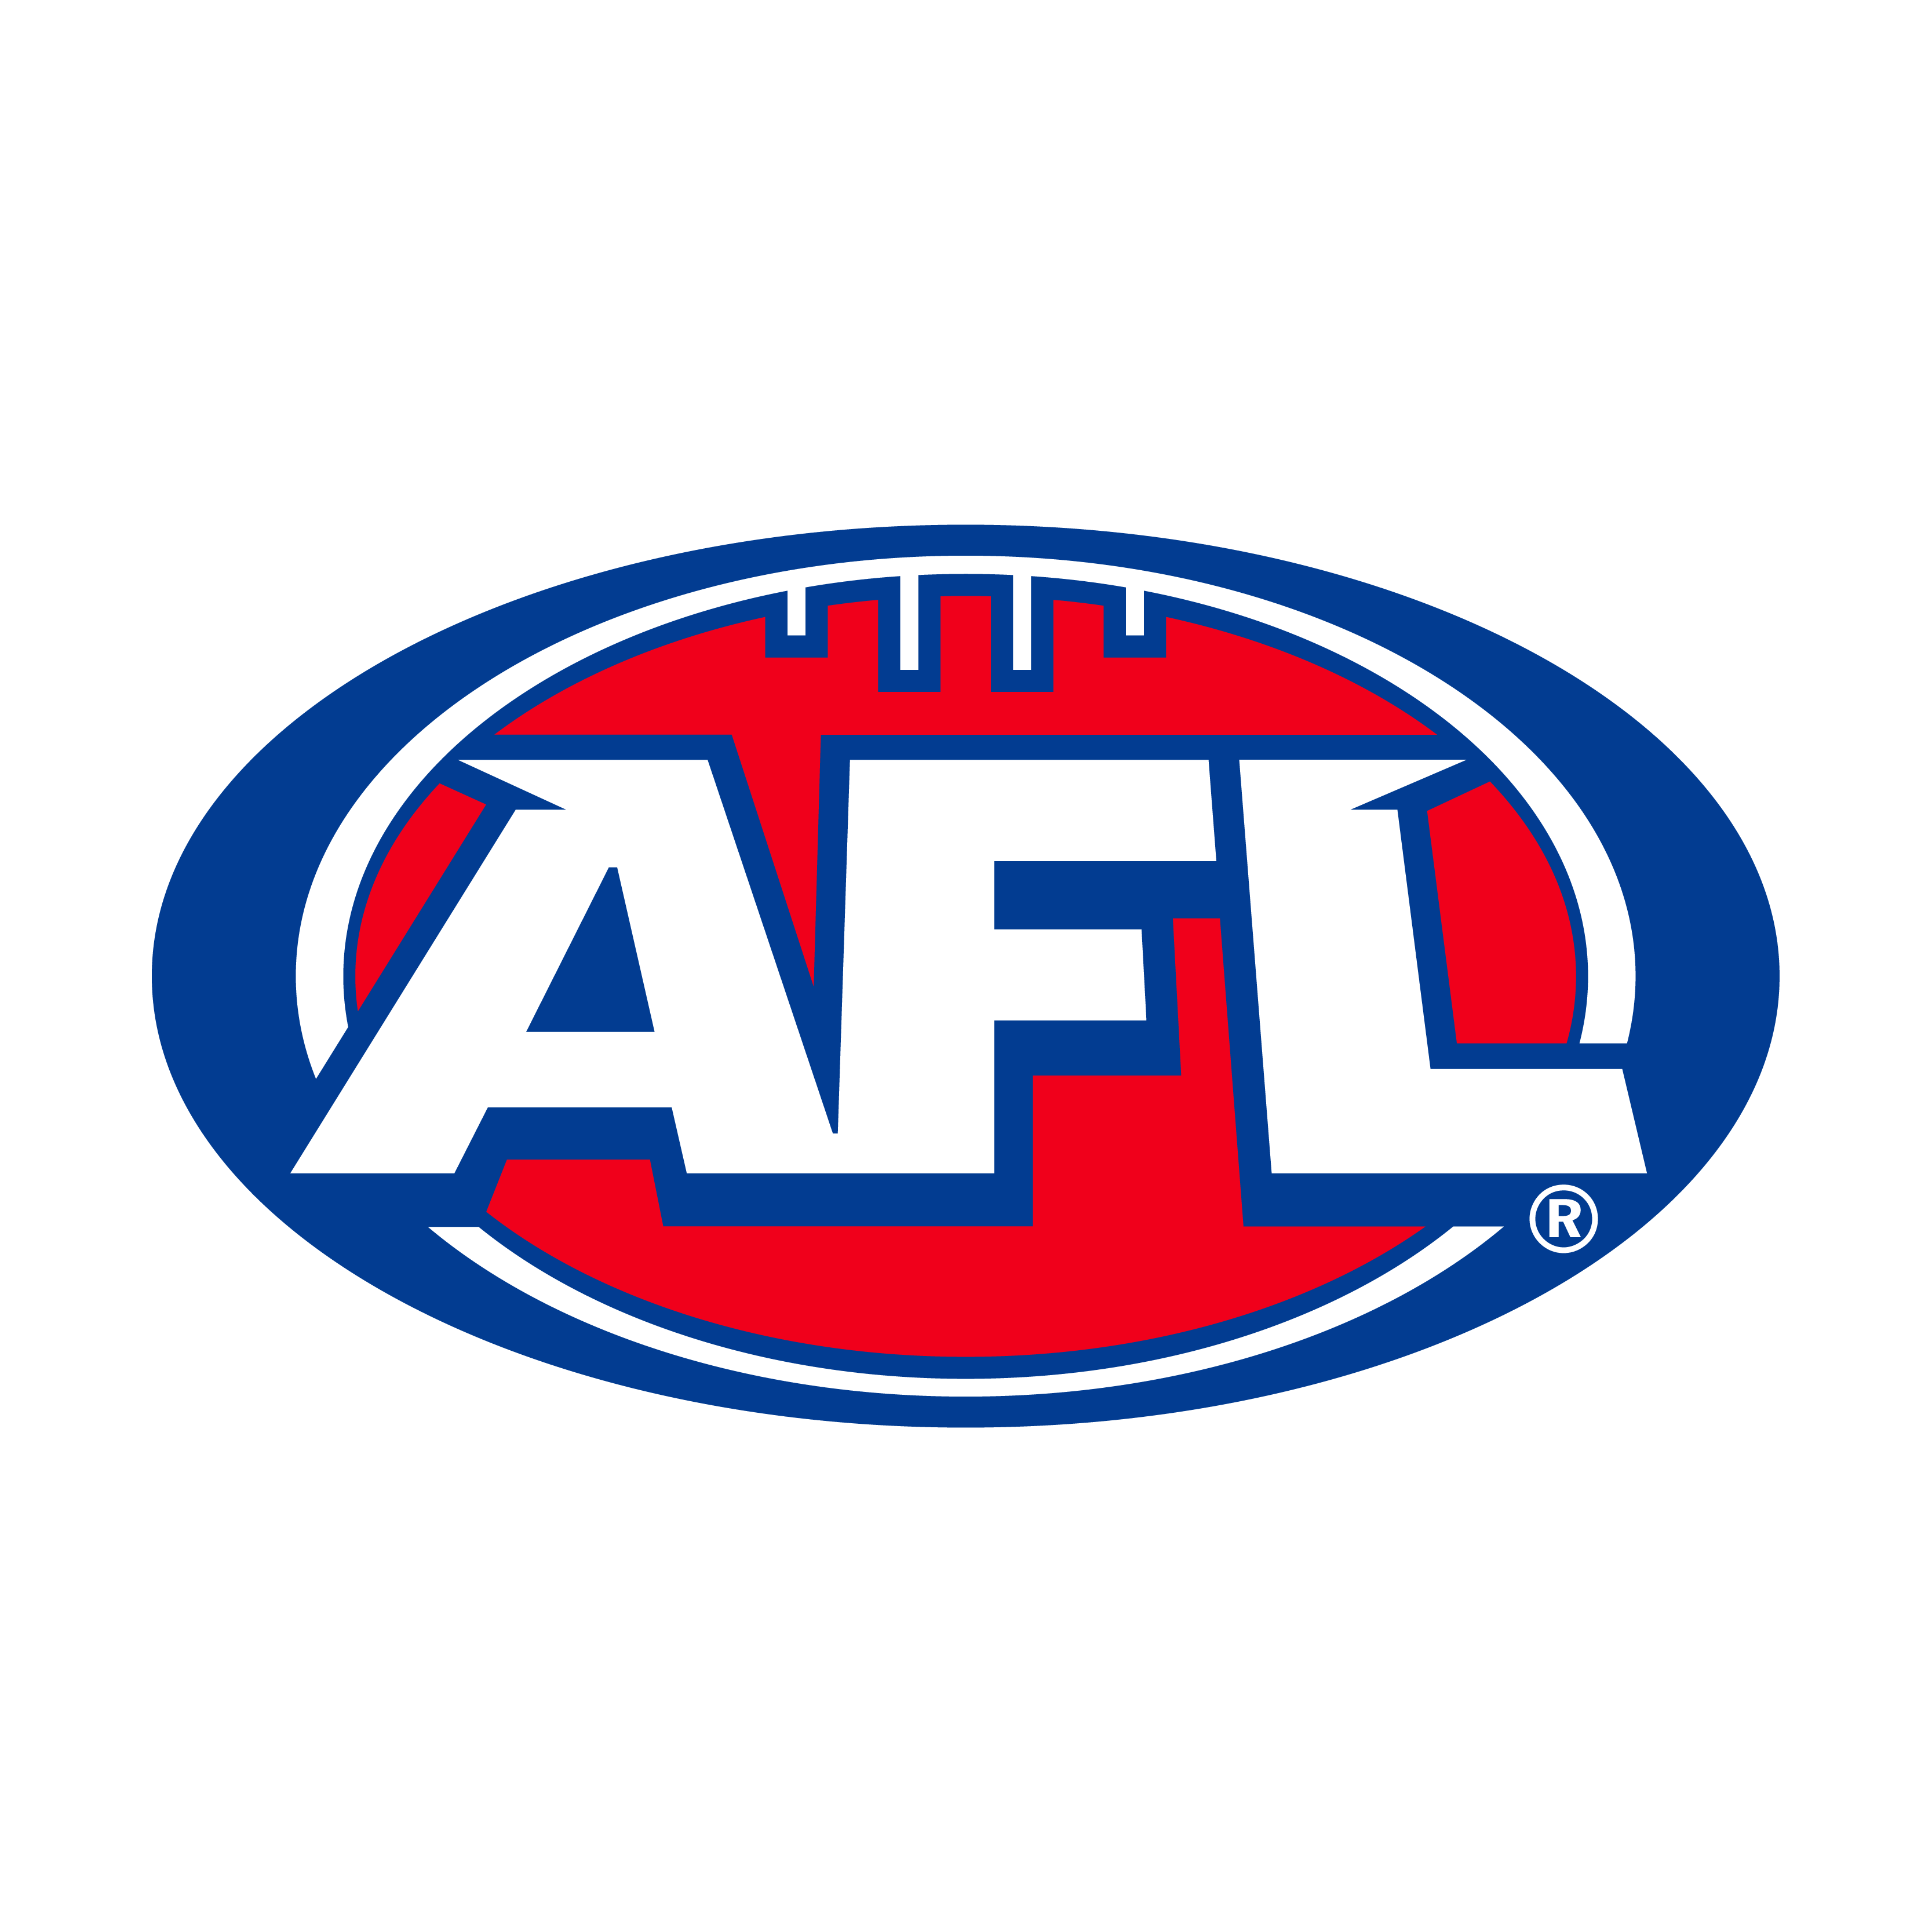 Australian Football League